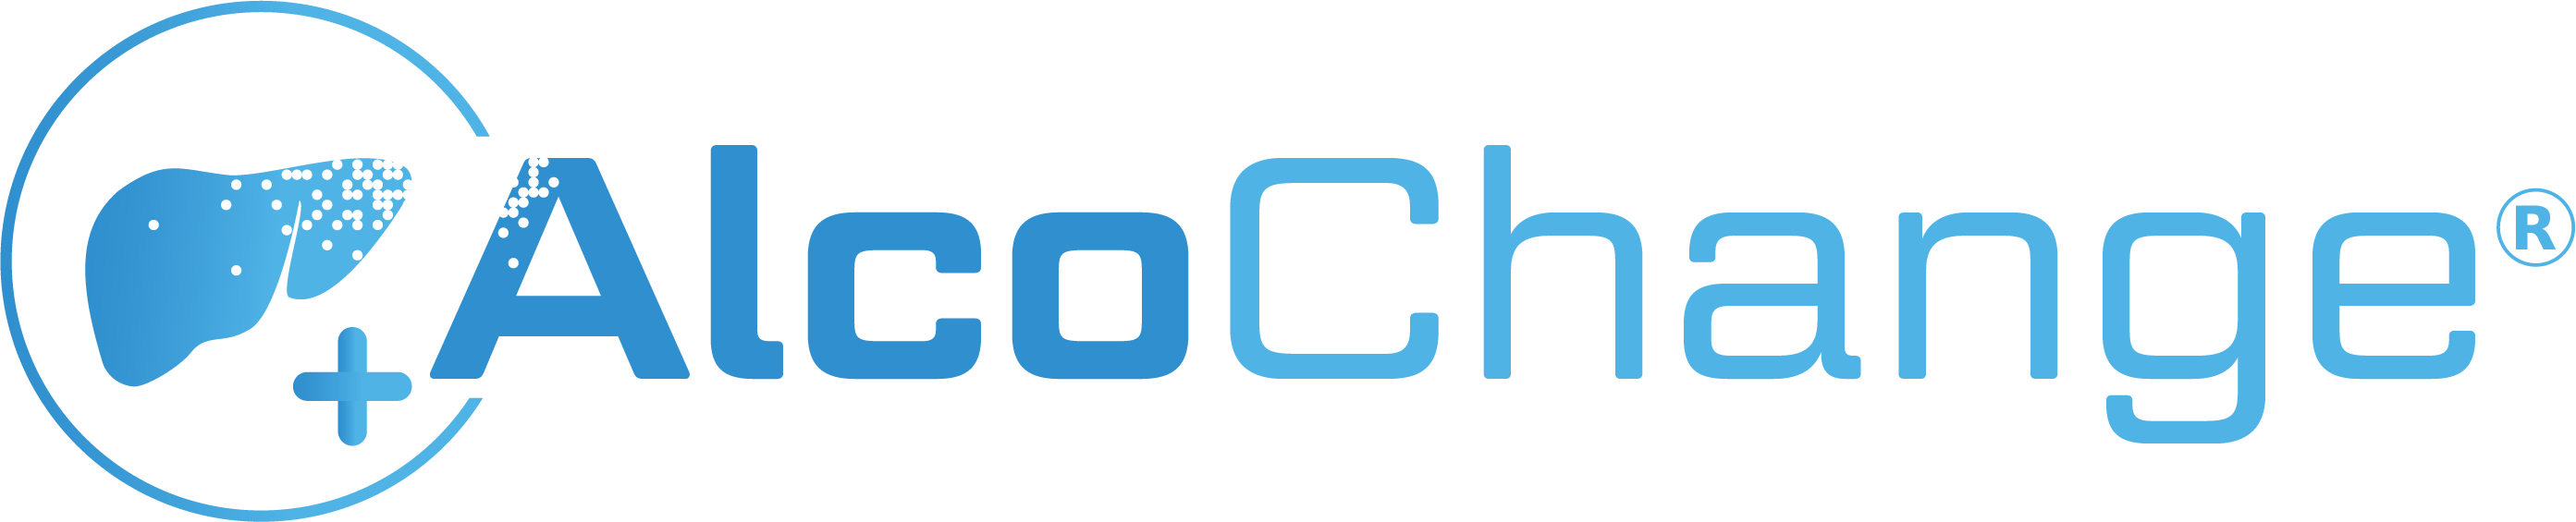 alcochange_logo